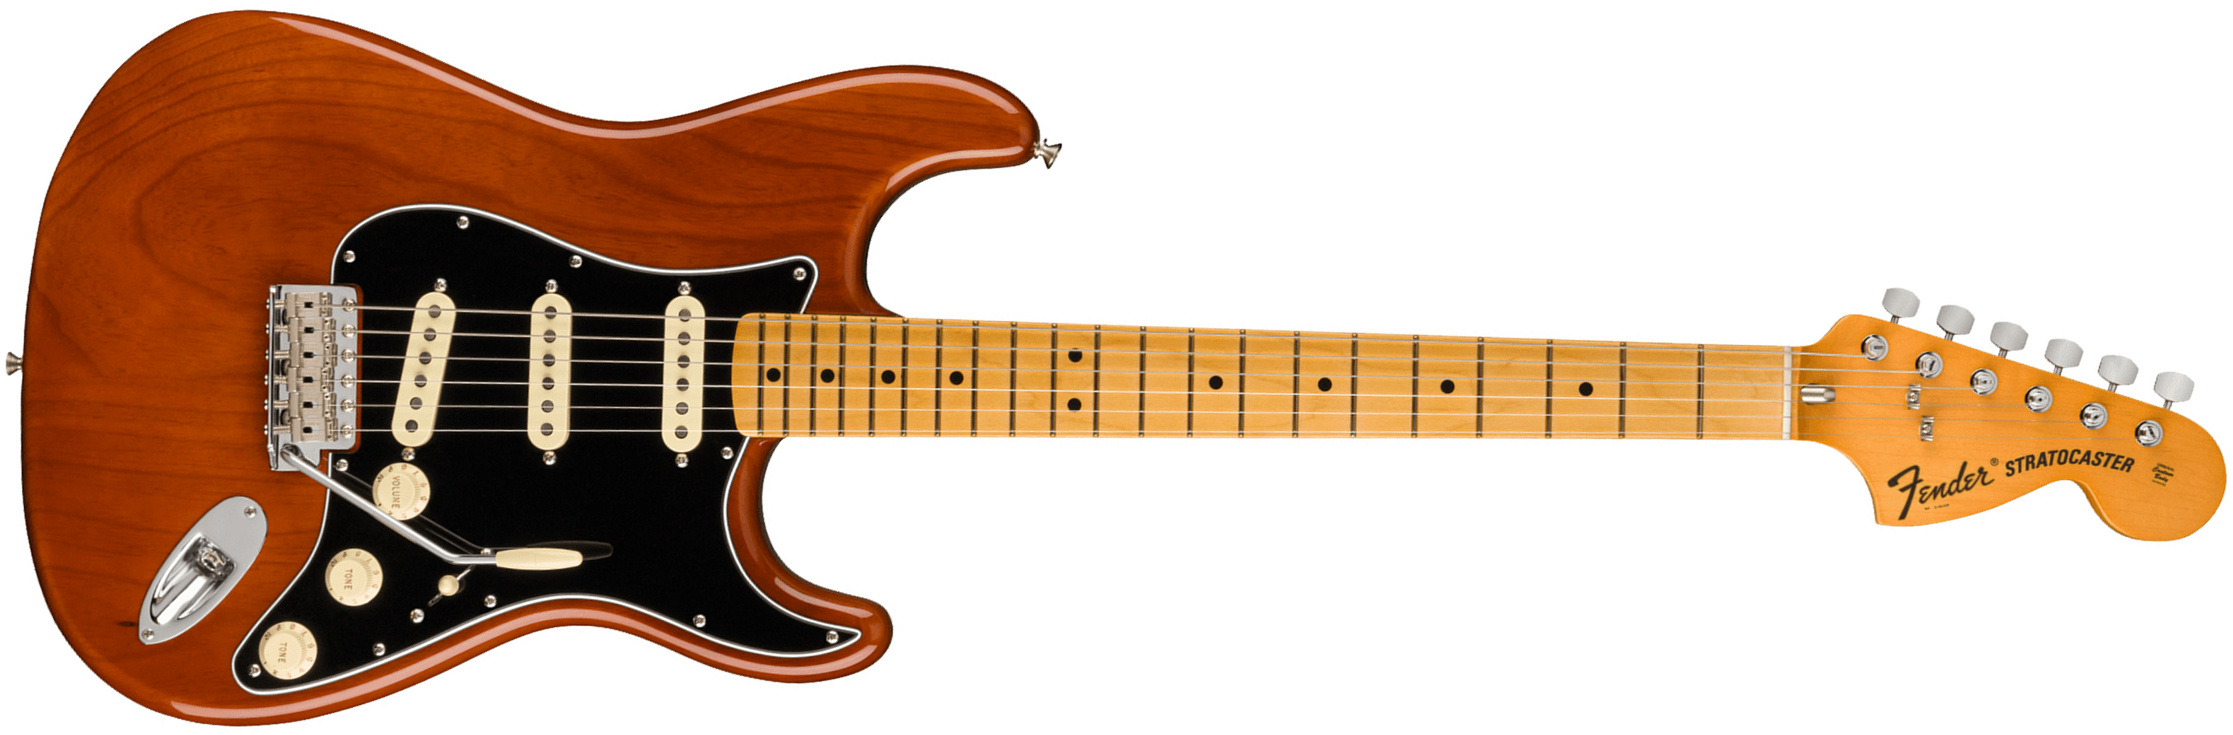 Fender Strat 1973 American Vintage Ii Usa 3s Trem Mn - Mocha - Str shape electric guitar - Main picture